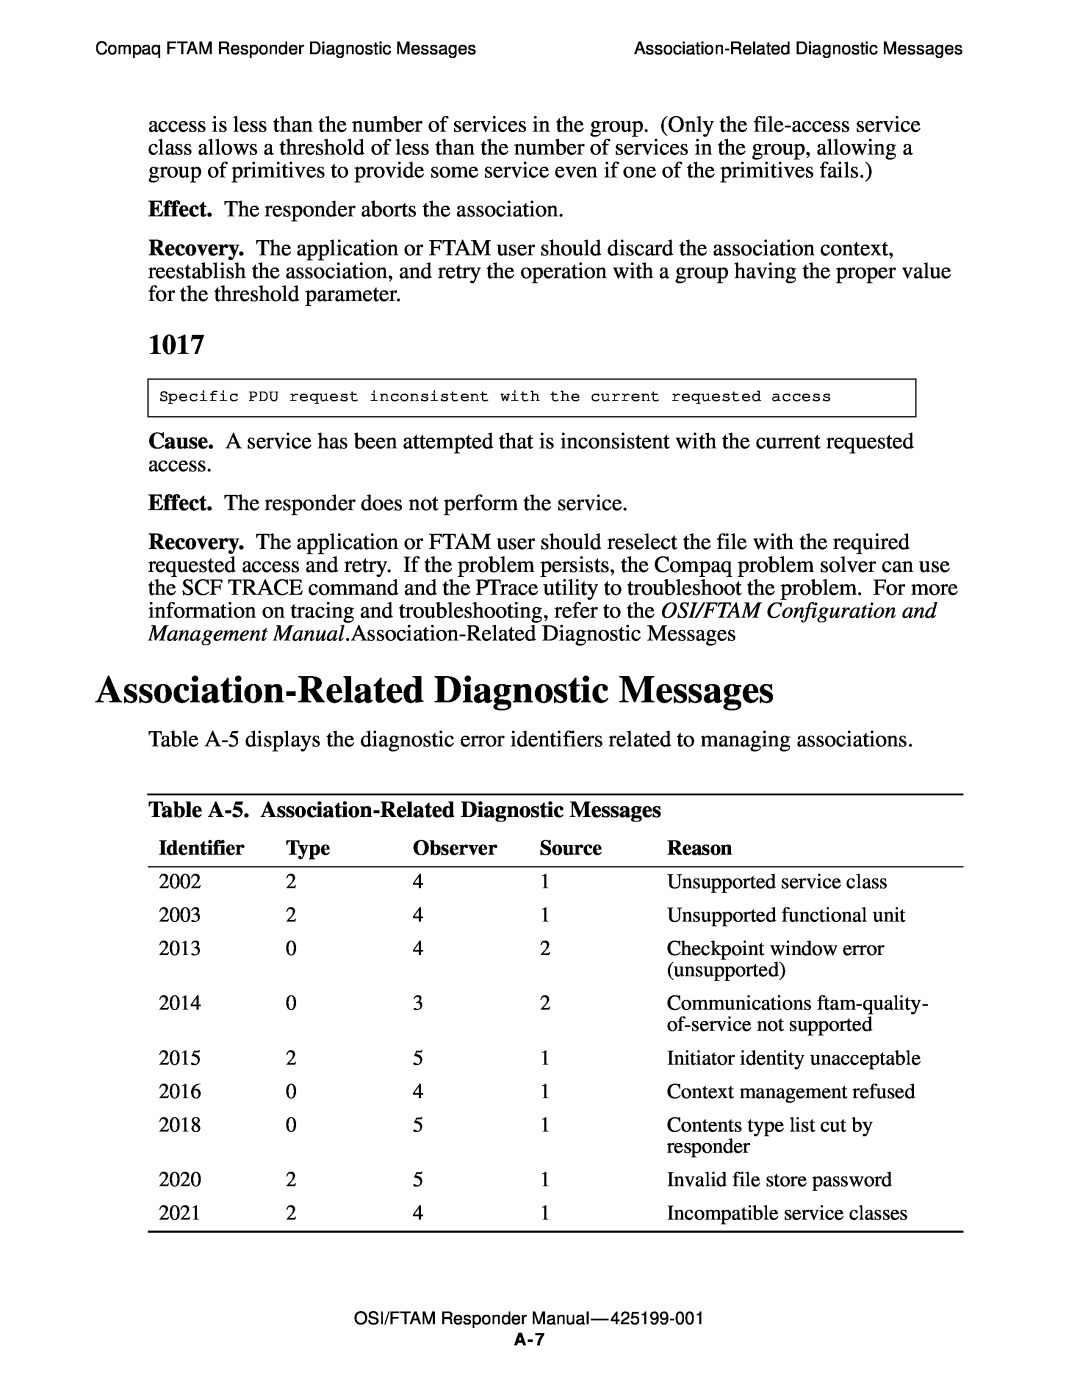 Compaq OSI/FTAM D43, OSI/APLMGR D43 manual 1017, Table A-5. Association-Related Diagnostic Messages 